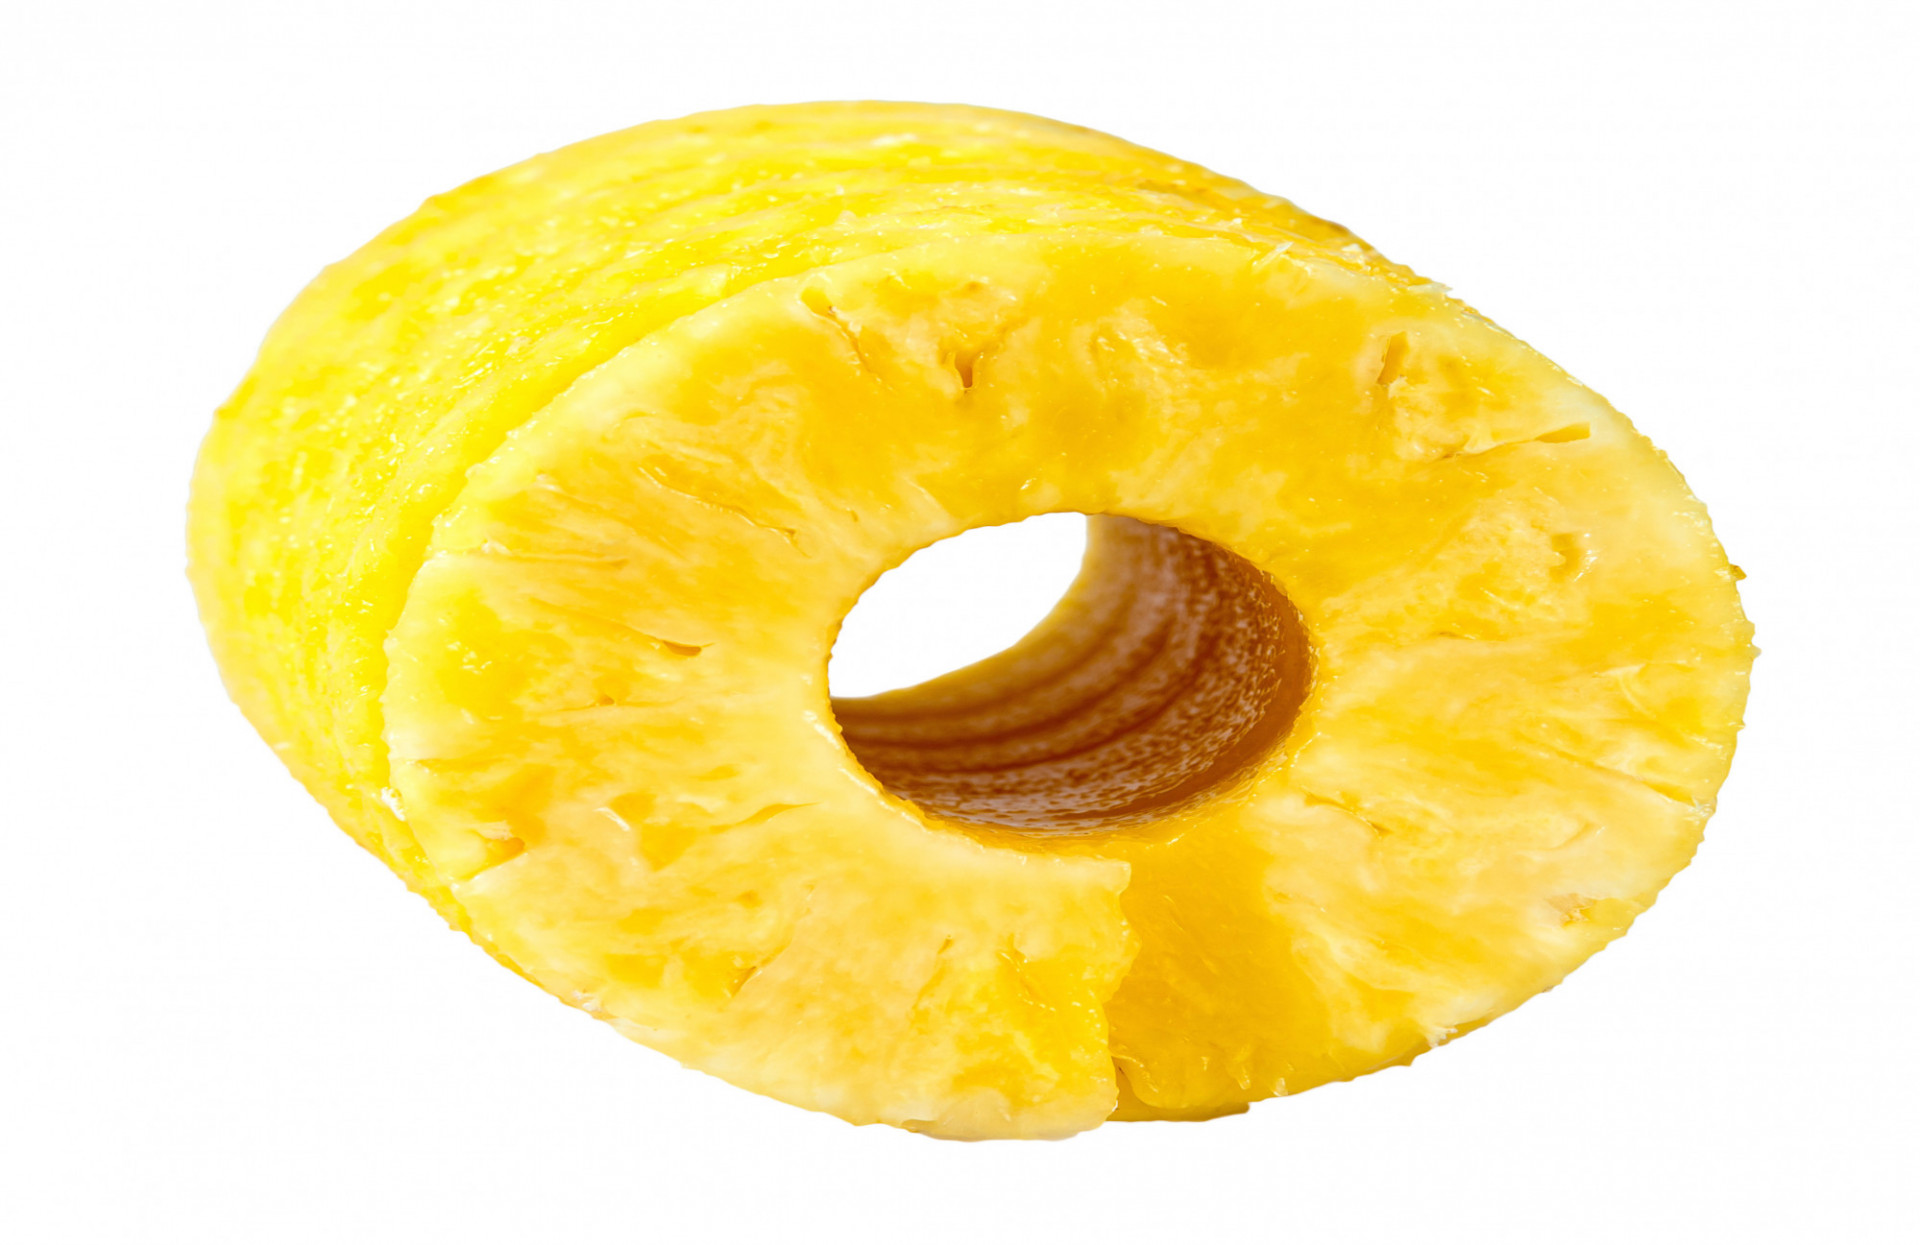 Rondelles d'Ananas